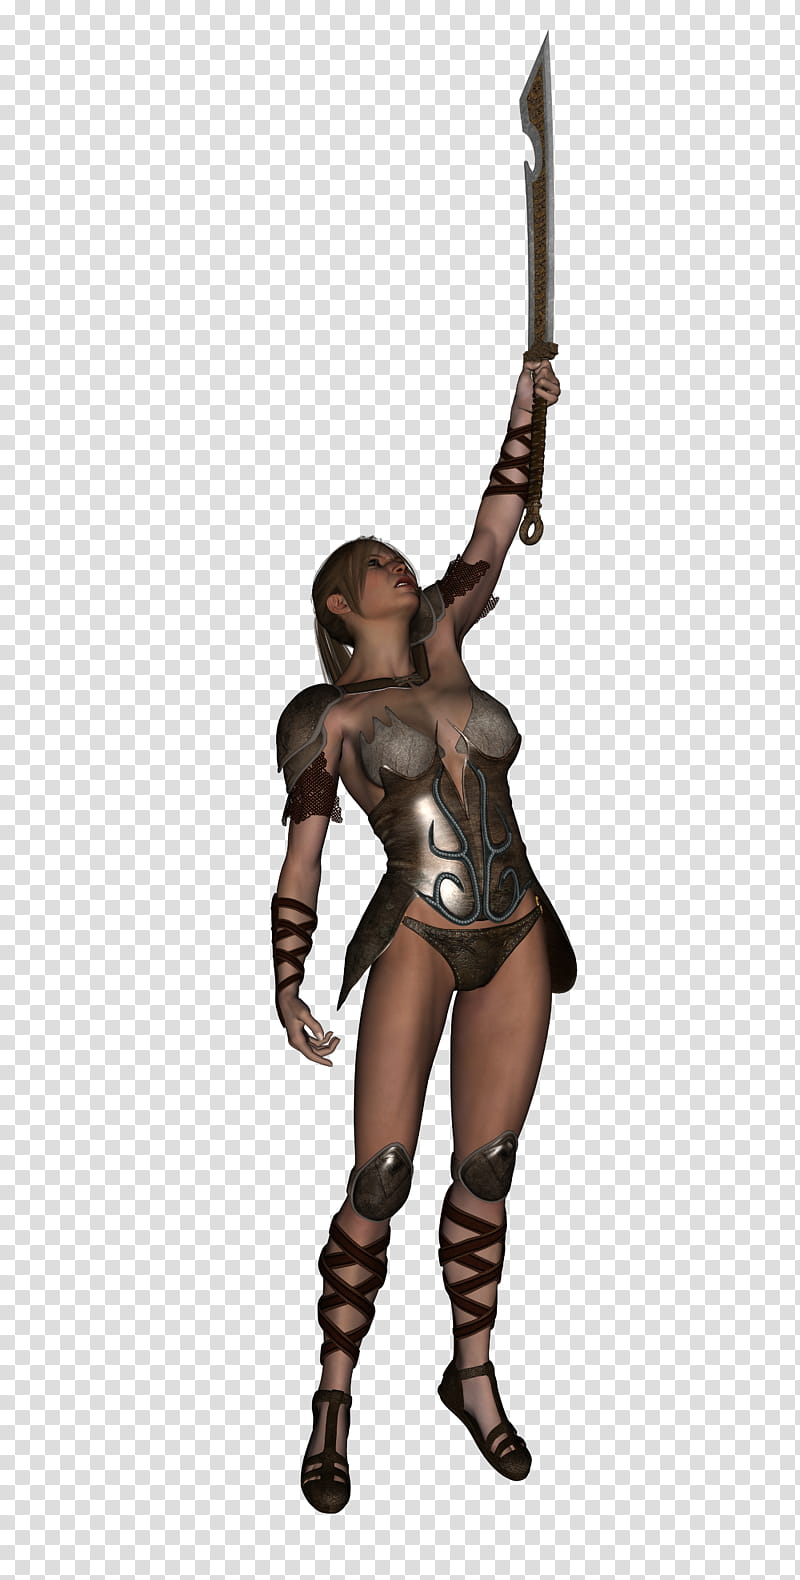 Warriors set , standing woman wearing gray corset raising sword illustration transparent background PNG clipart